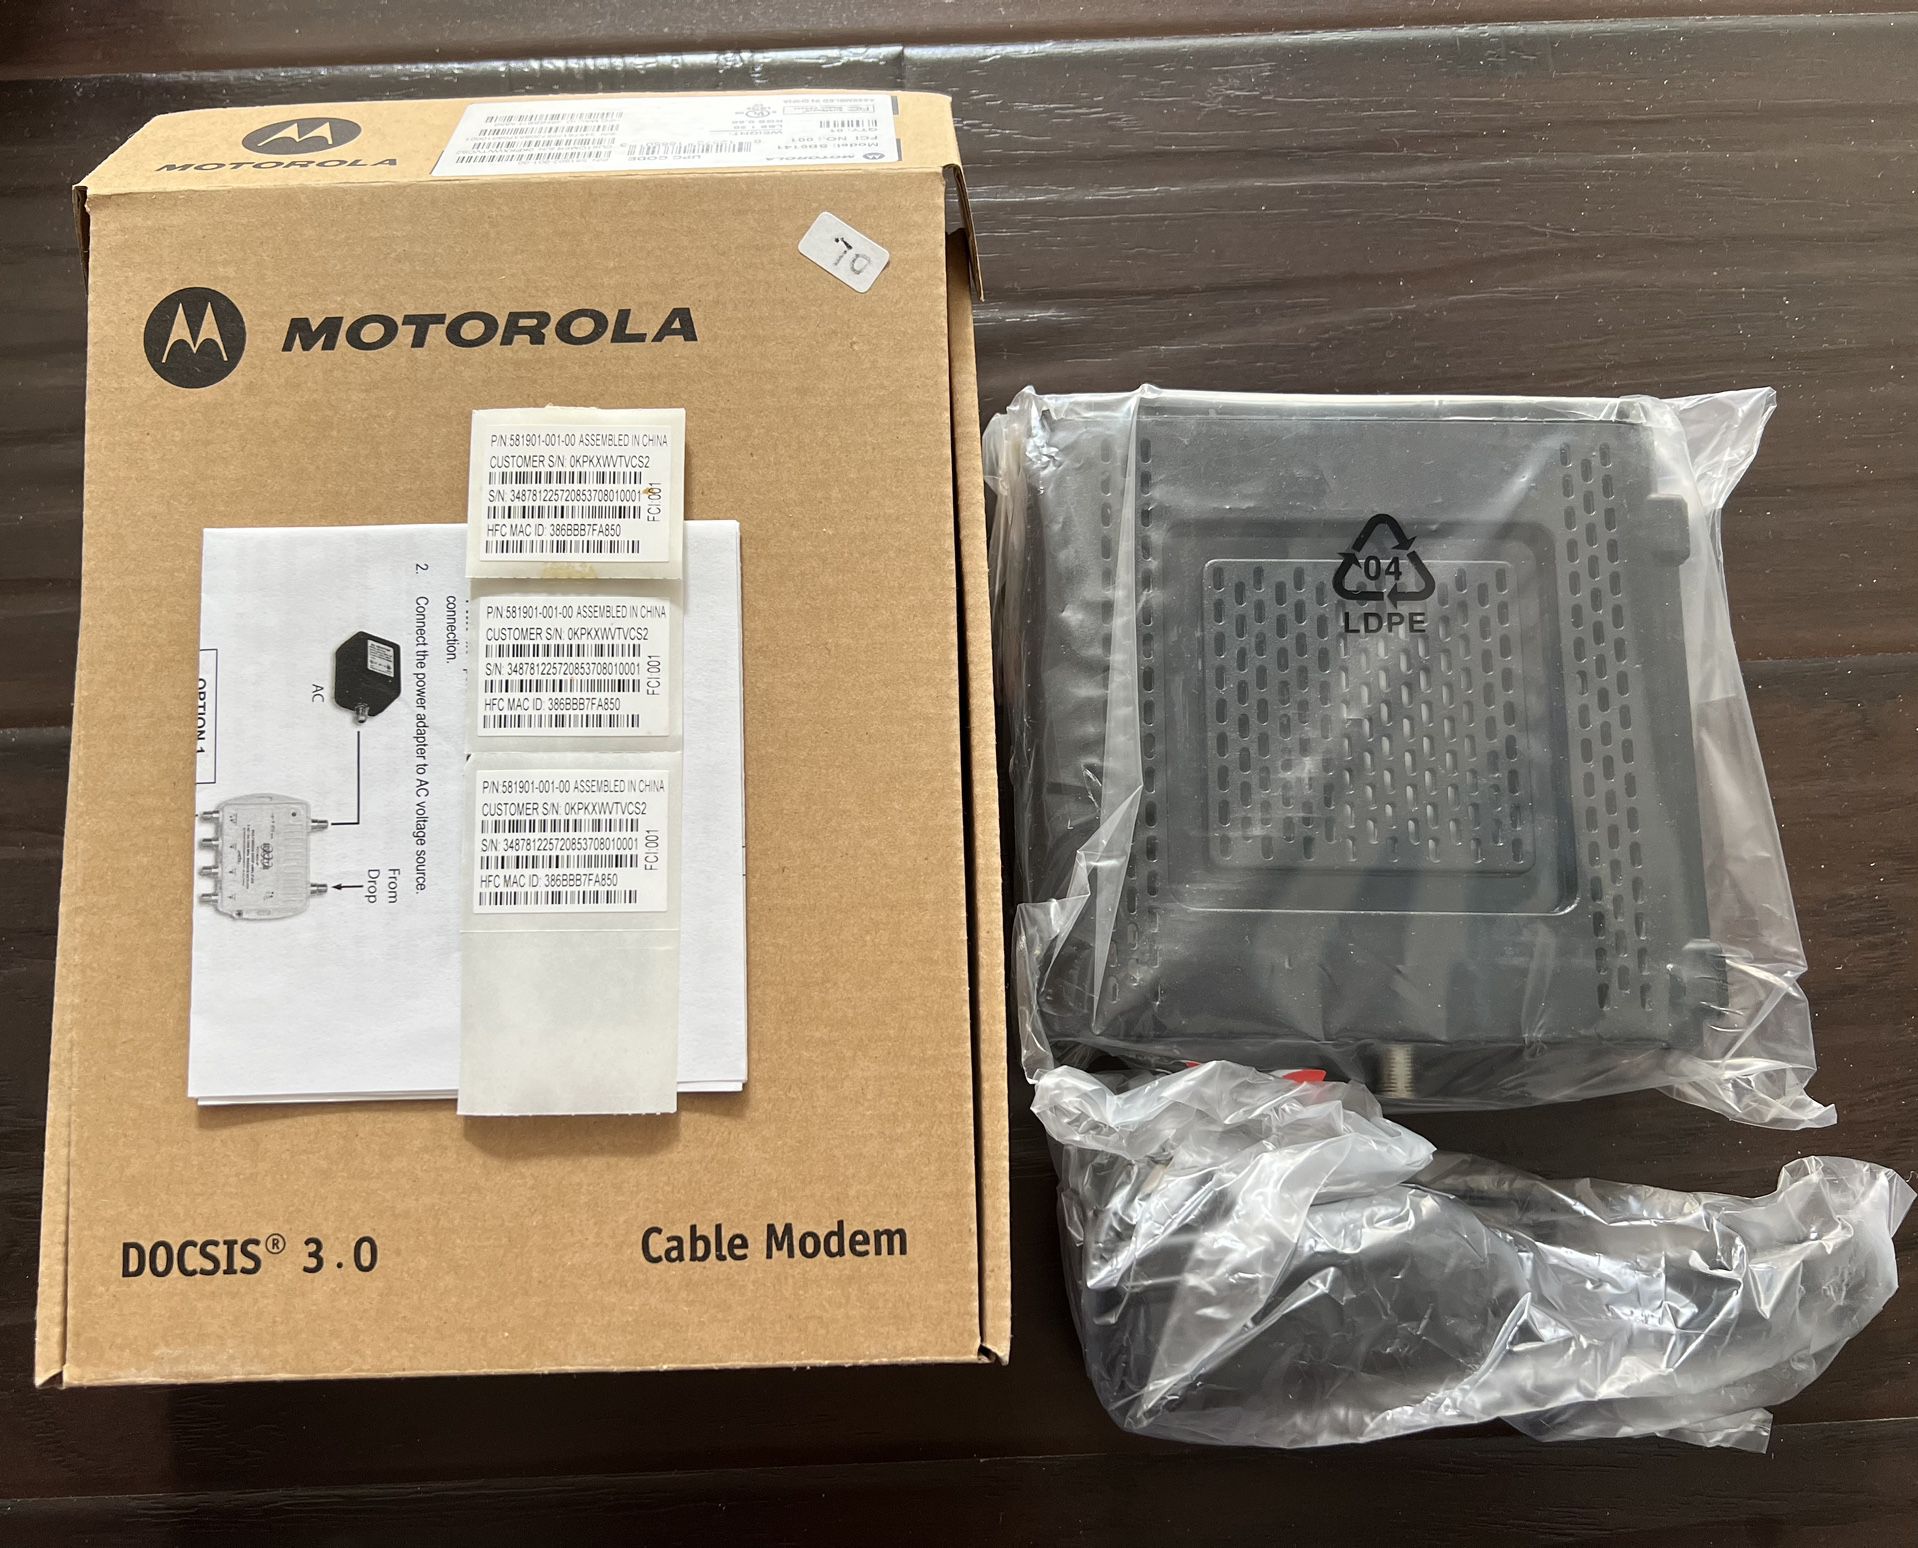 Motorola Cable Modem Docsis 3.0